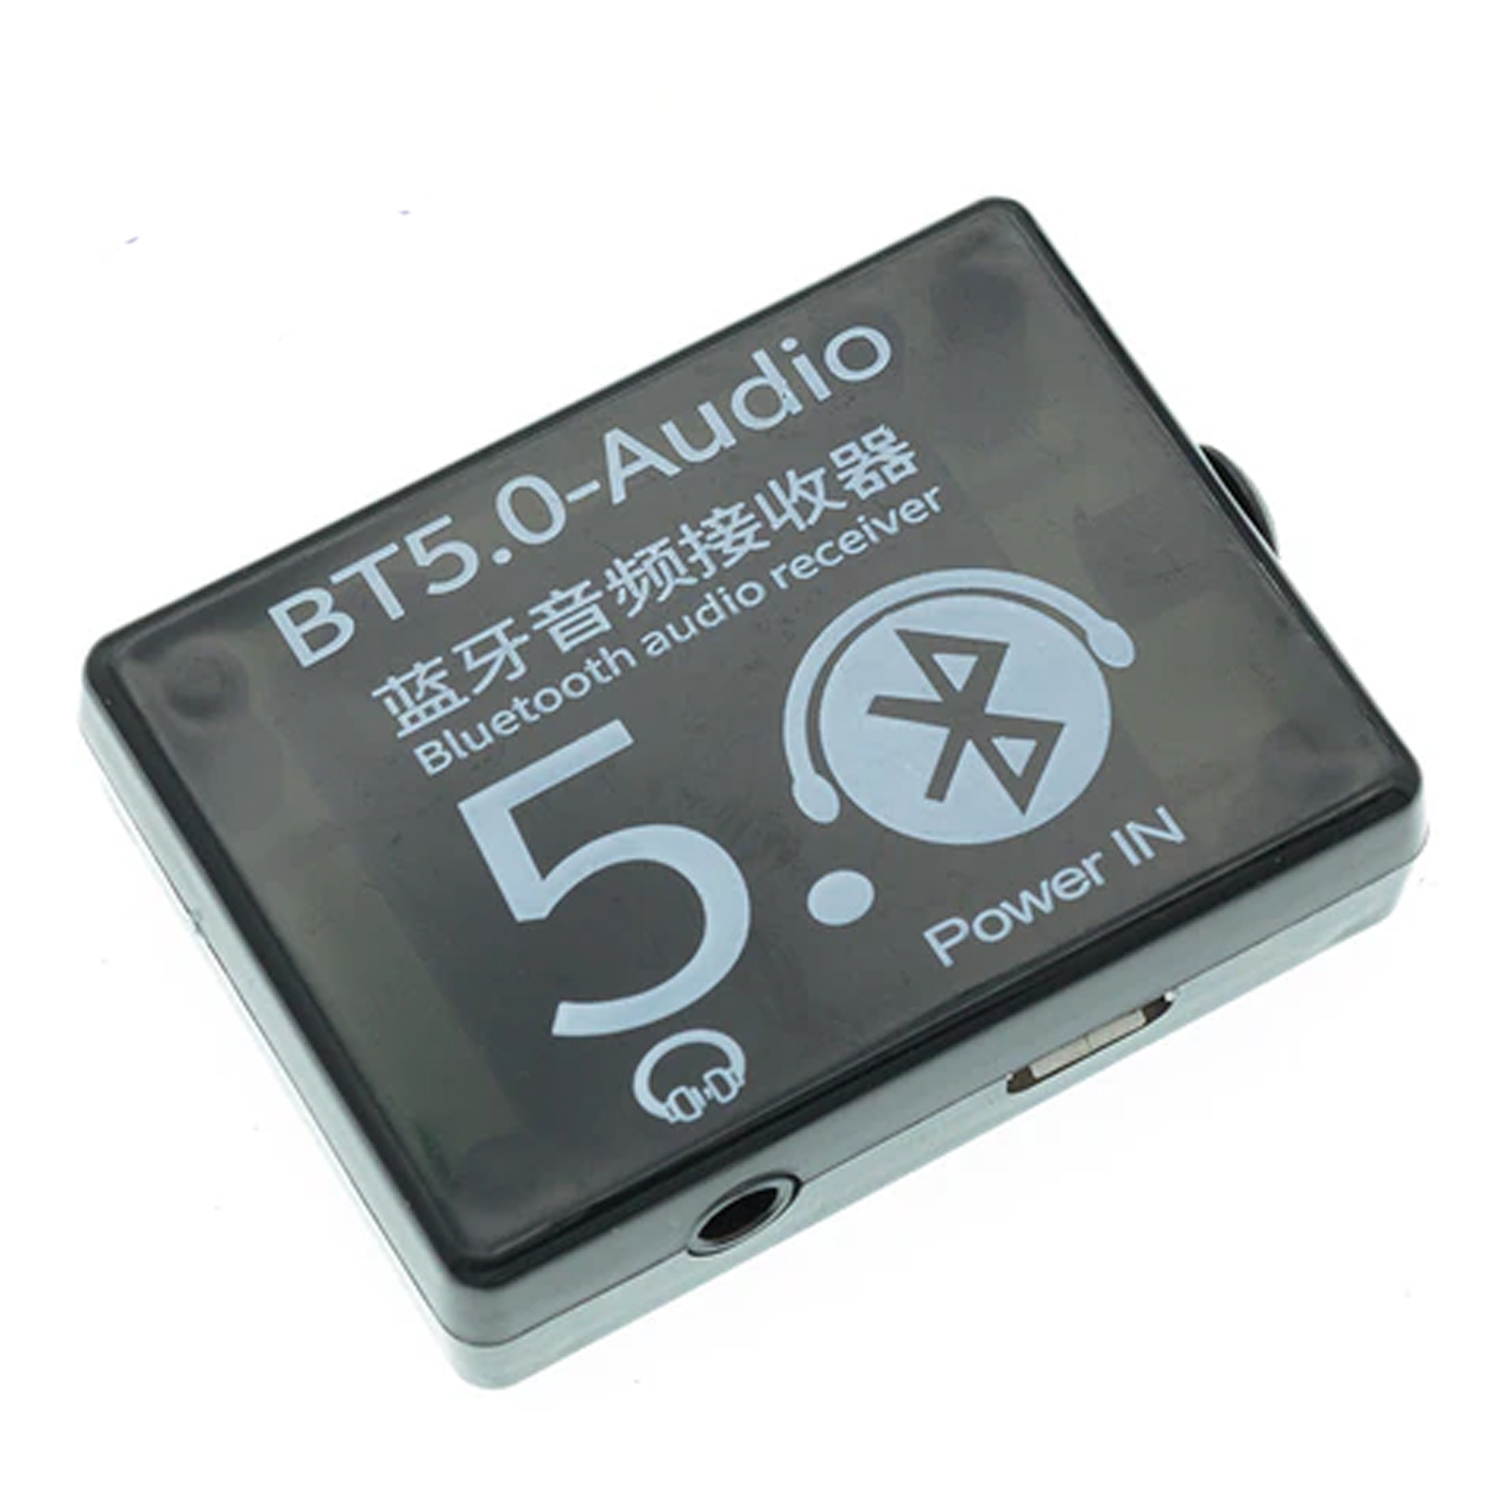 Модуль bluetooth BT5.0-audio в корпусе, фото